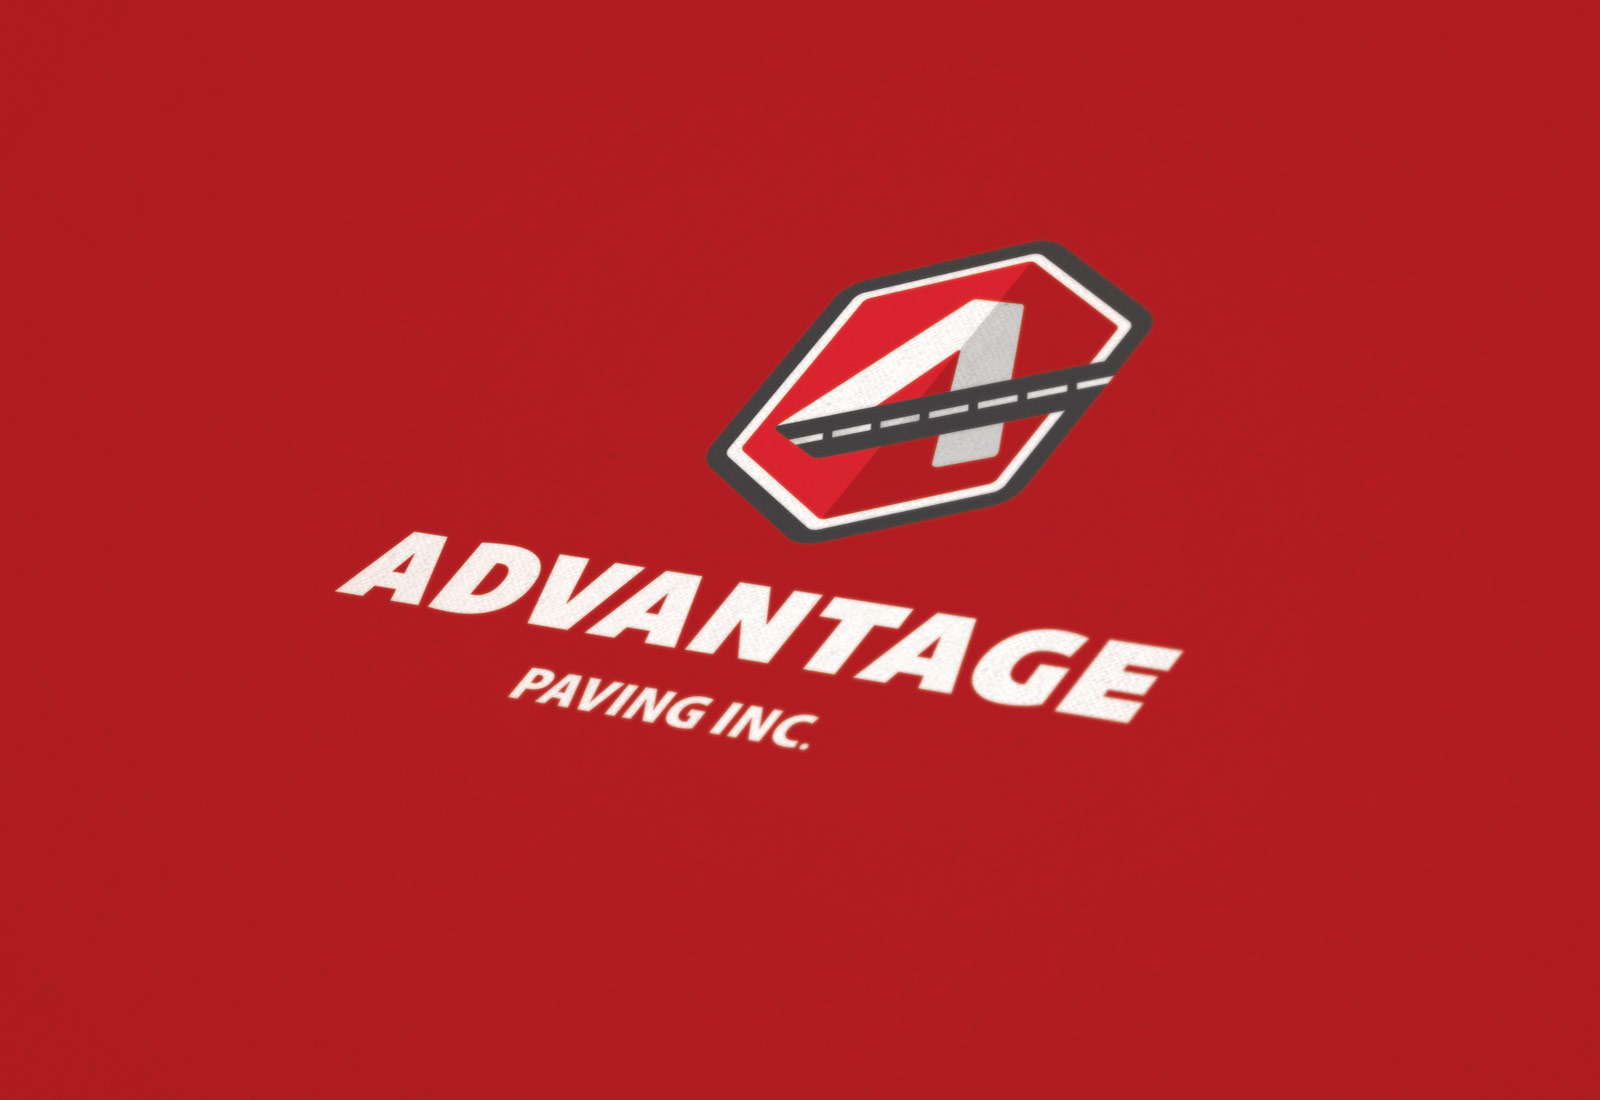 Advantage Paving Logo